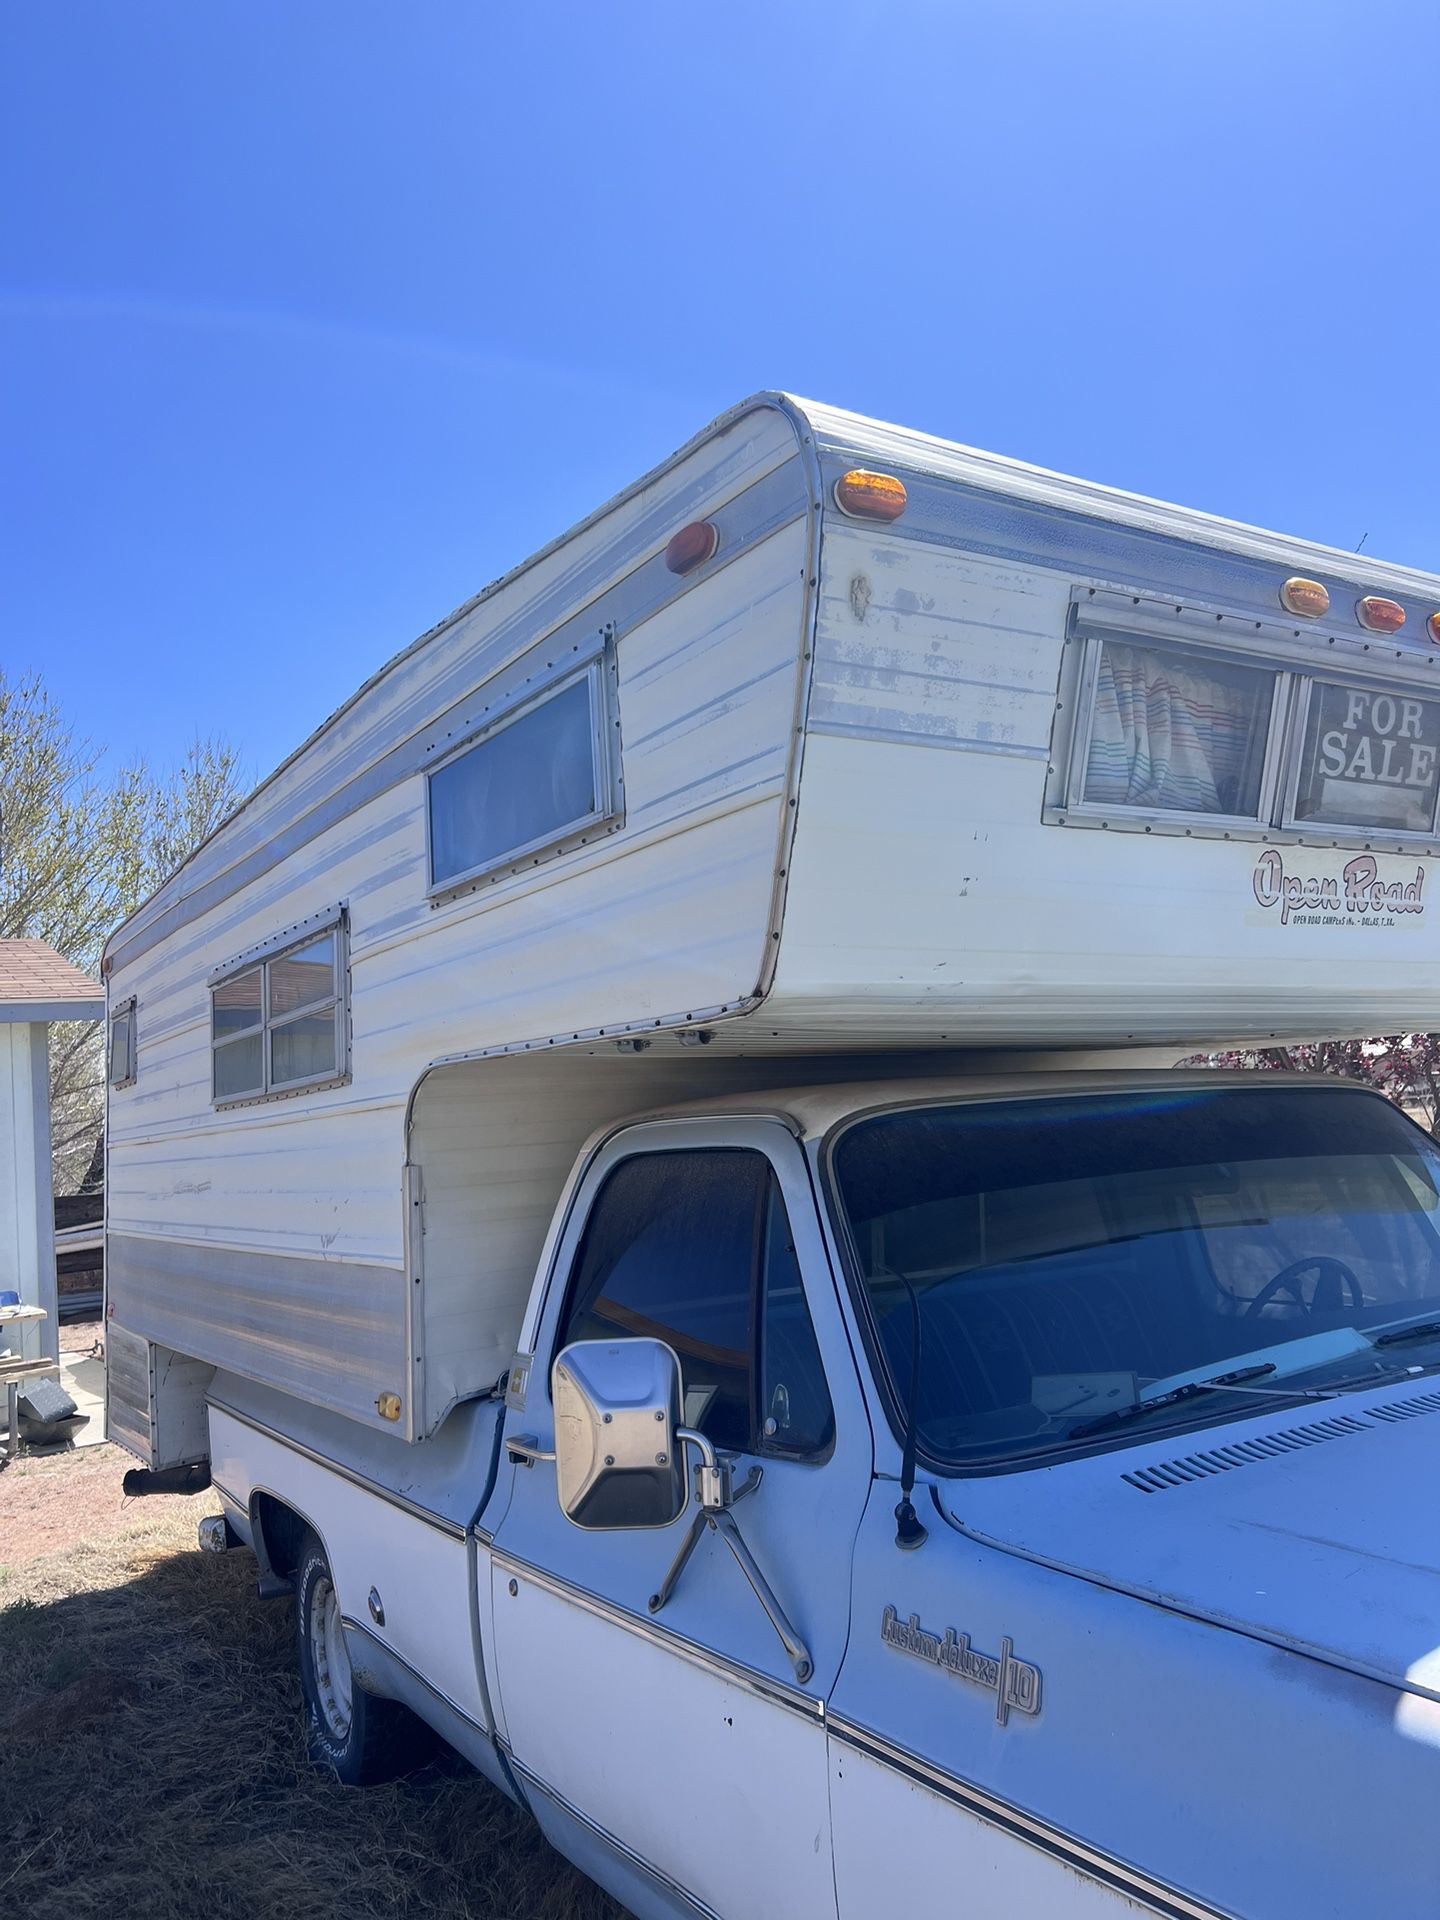 Overhead Camper $700